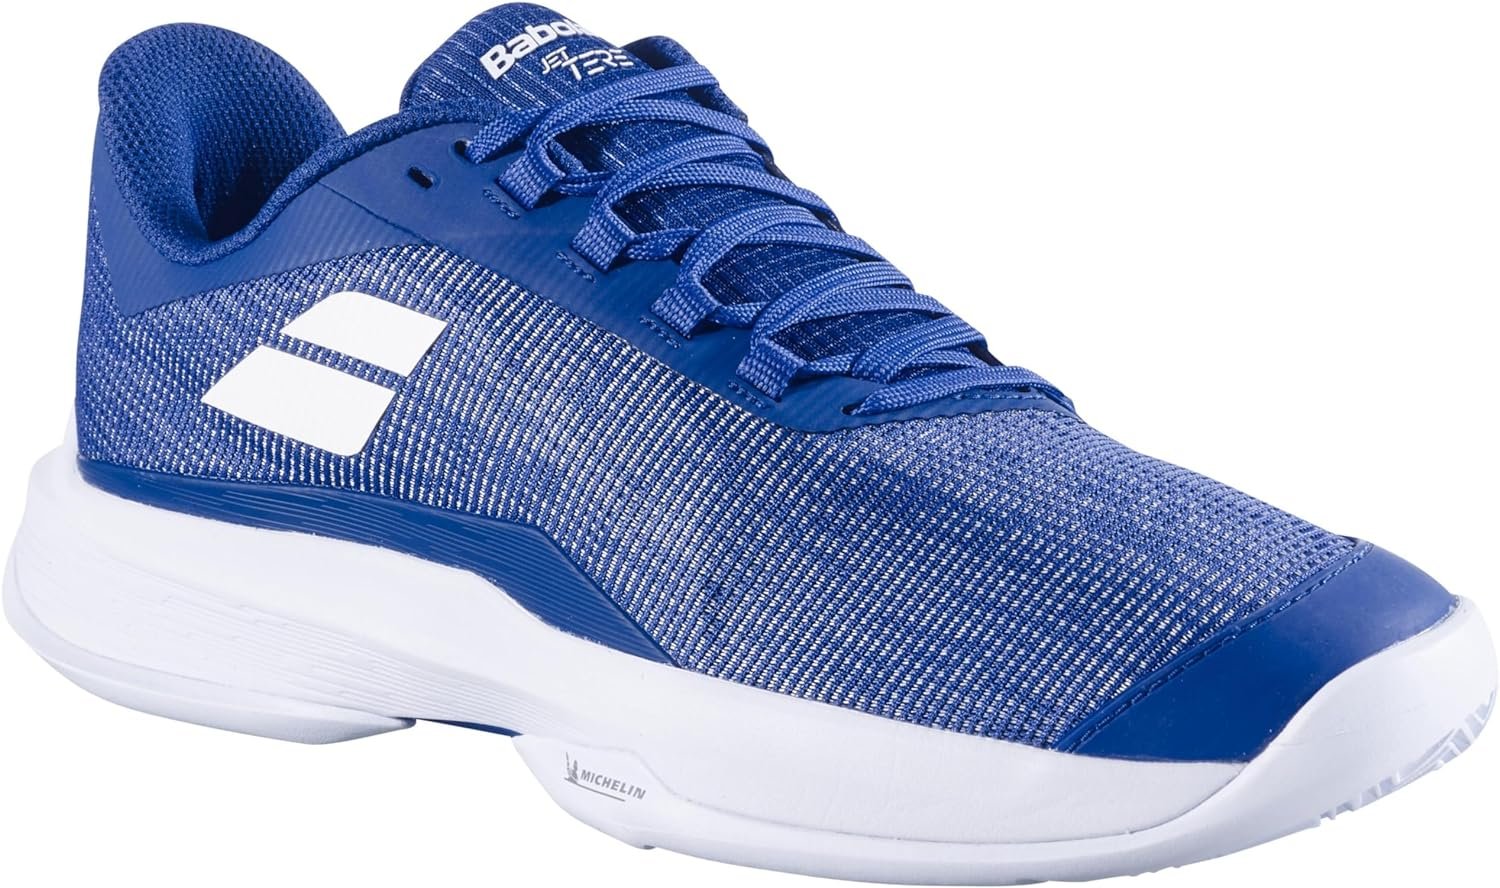 Babolat Men's Jet Tere 2 Clay Court Tennis Shoe, Mombeo Blue